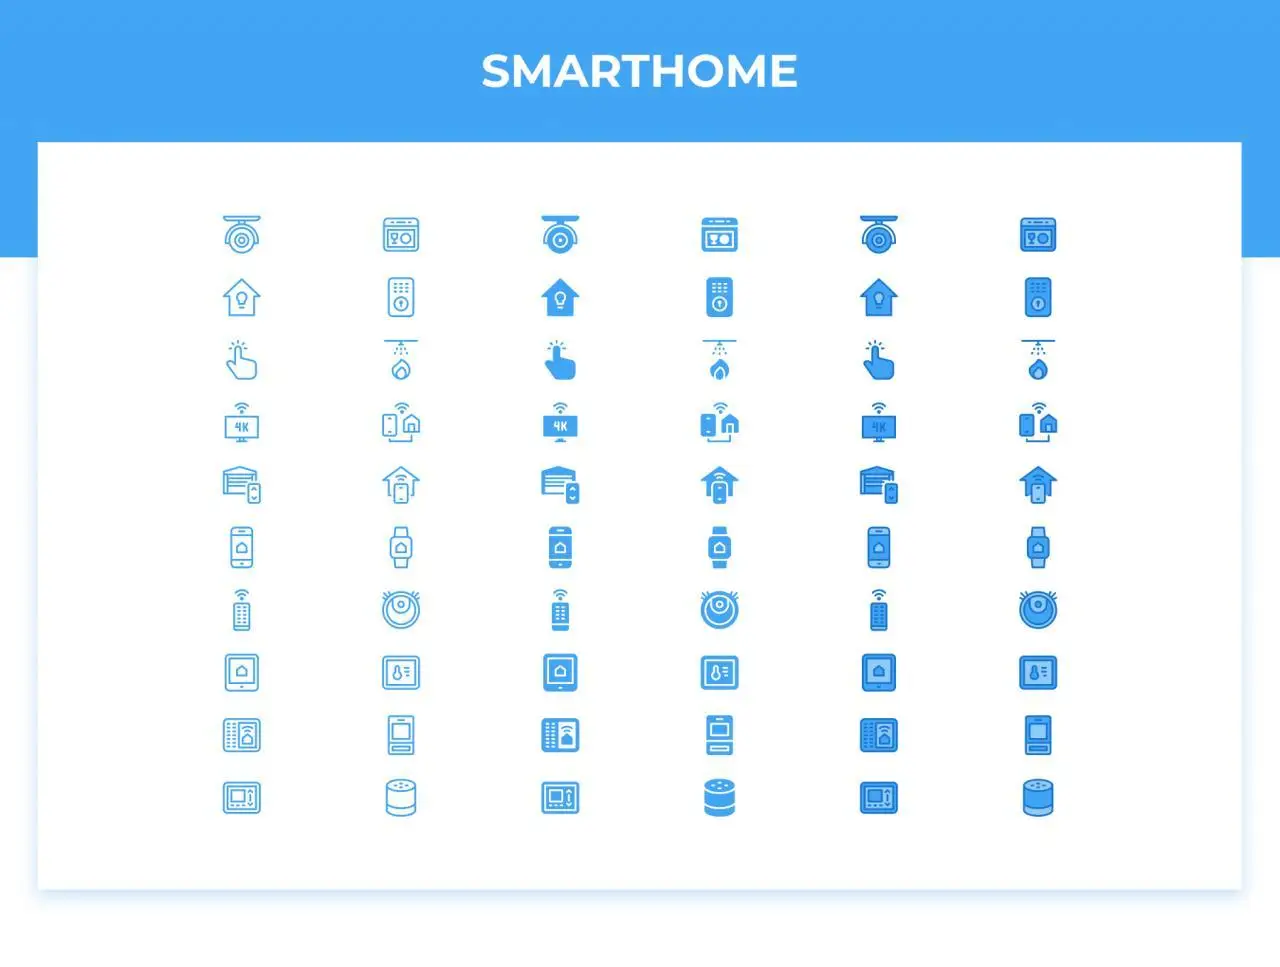 Furniture & Smarthome Icons 多风格家具和智能家居图标-3D/图标-到位啦UI